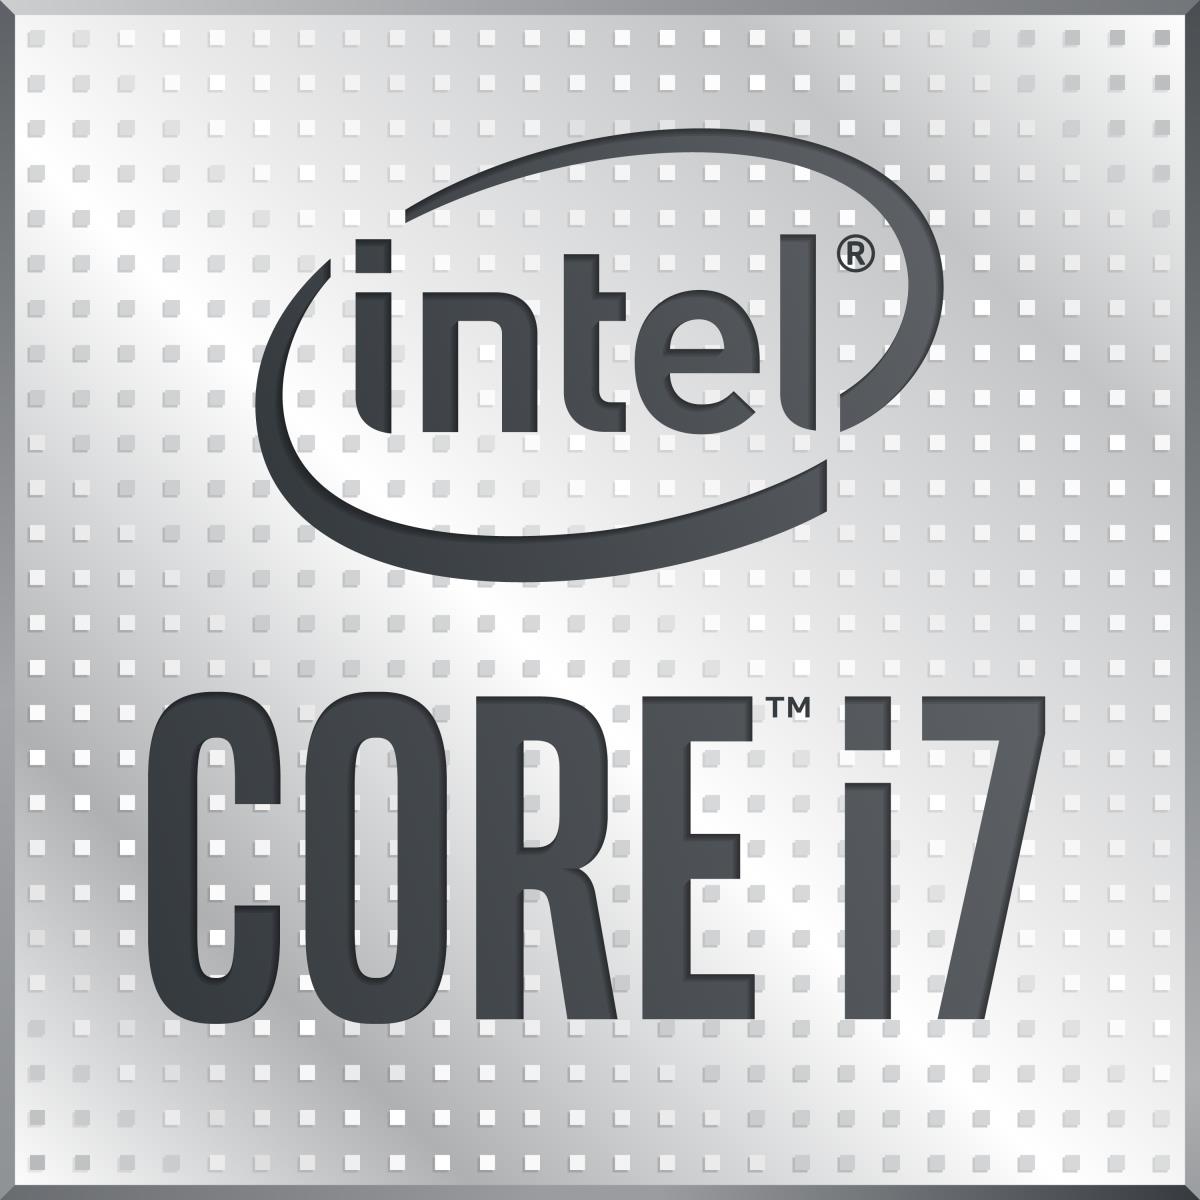  Intel Core i7-13700KF processor 30 MB Smart Cache Box